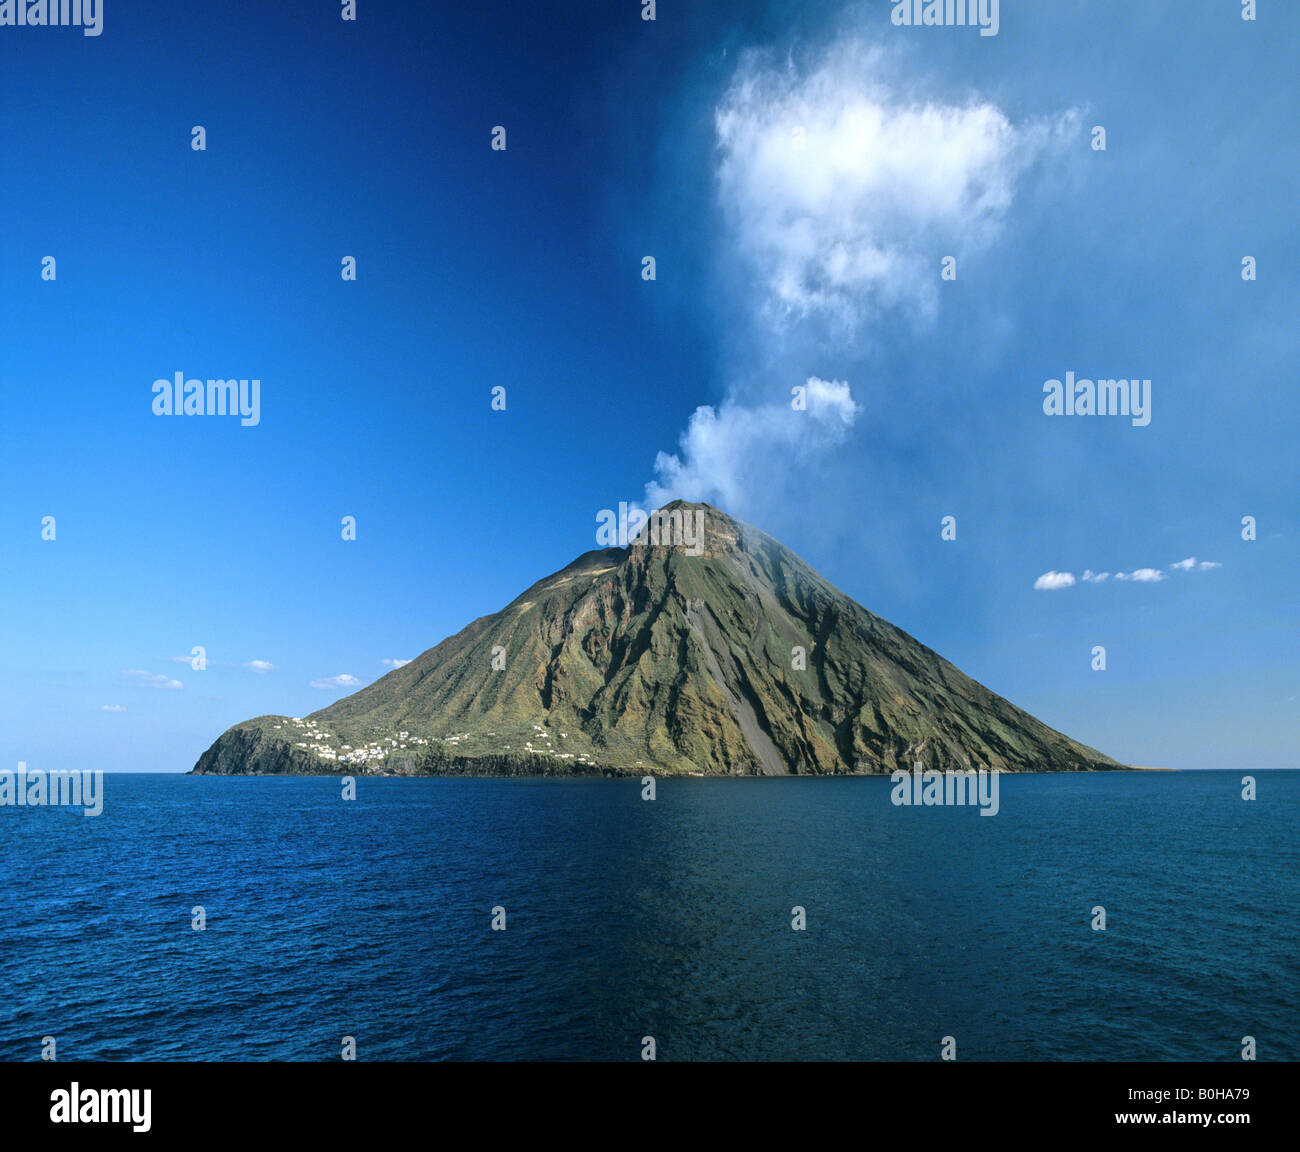 Insel Stromboli, Vulkan, Vulkanausbruch, Wolken von Asche, Äolischen Inseln, Sizilien, Italien Stockfoto